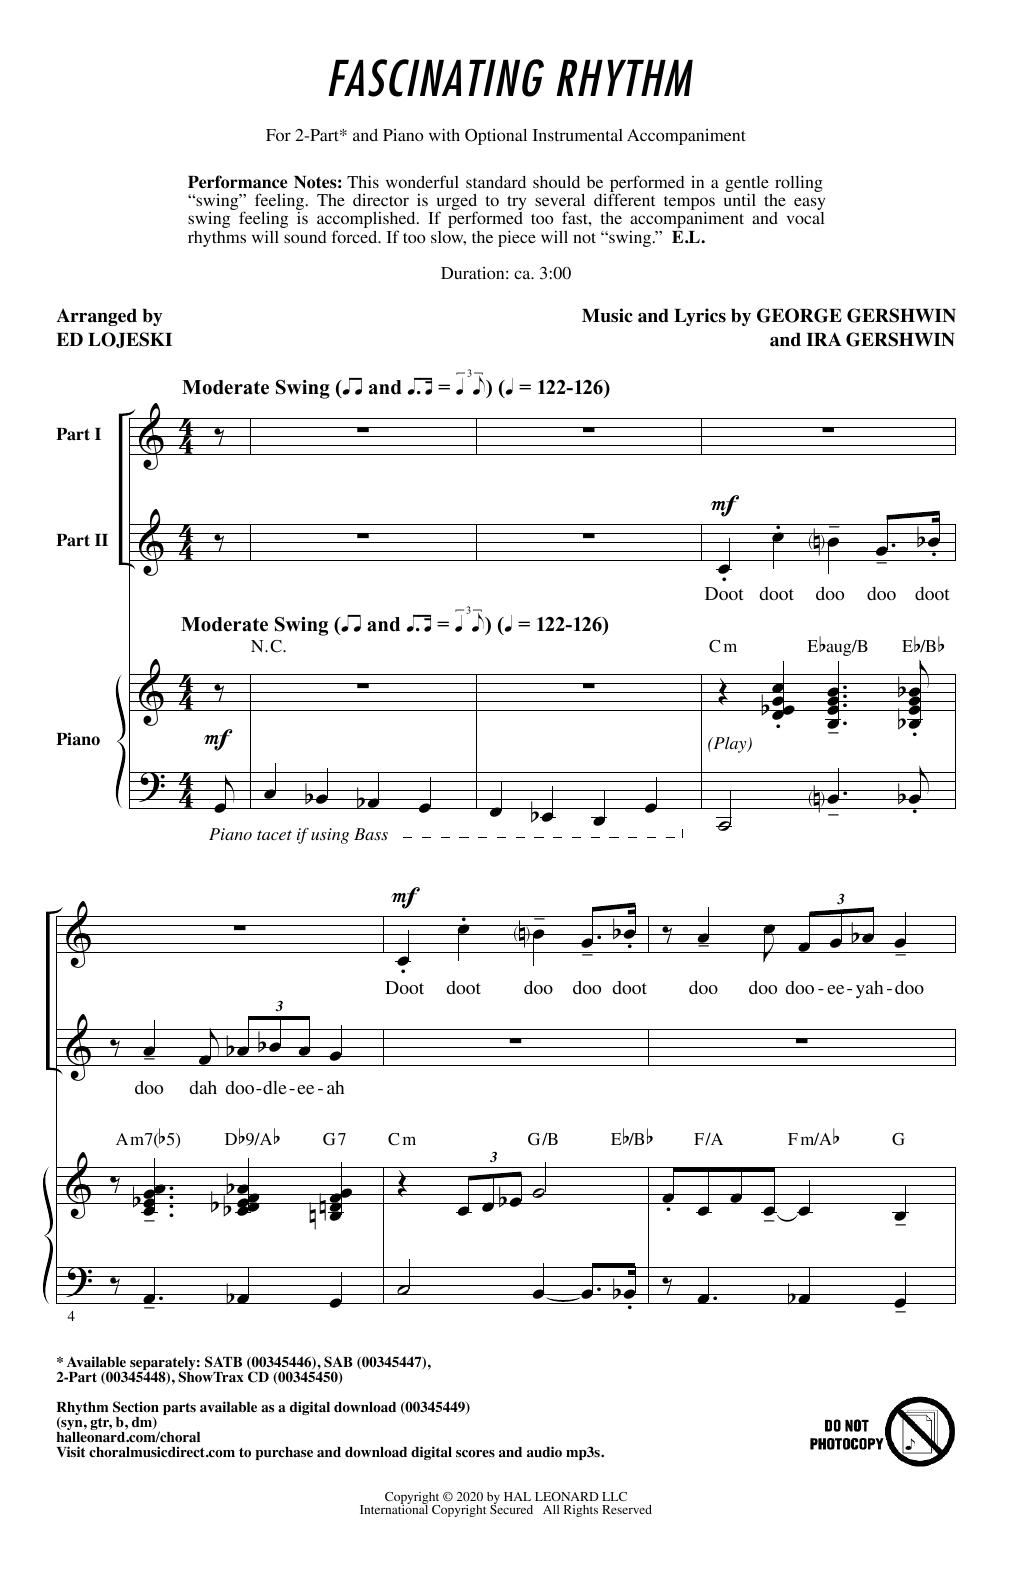 George Gershwin & Ira Gershwin Fascinating Rhythm (from Lady Be Good) (arr. Ed Lojeski) Sheet Music Notes & Chords for SATB Choir - Download or Print PDF